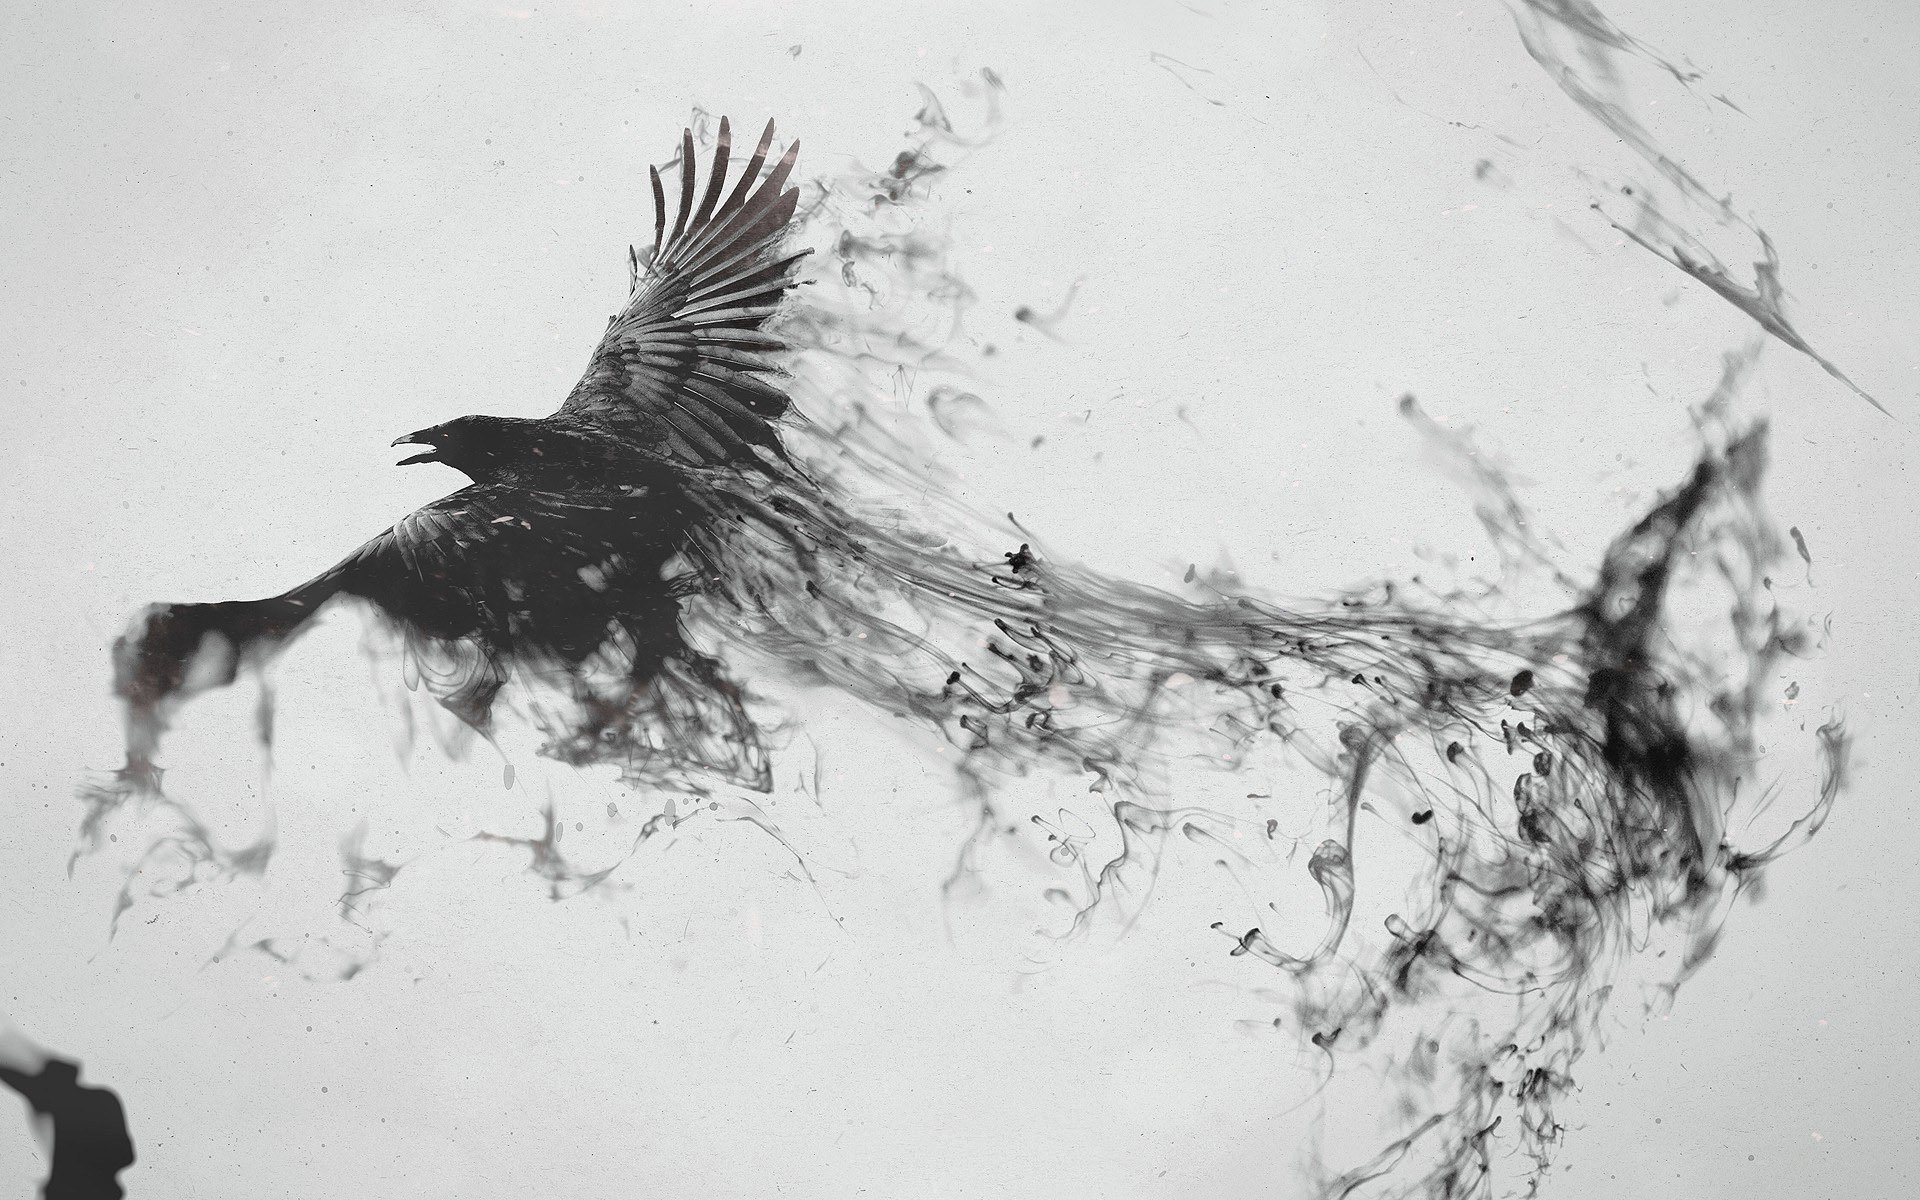 raven flying up black water art fulls creen 1920x1200